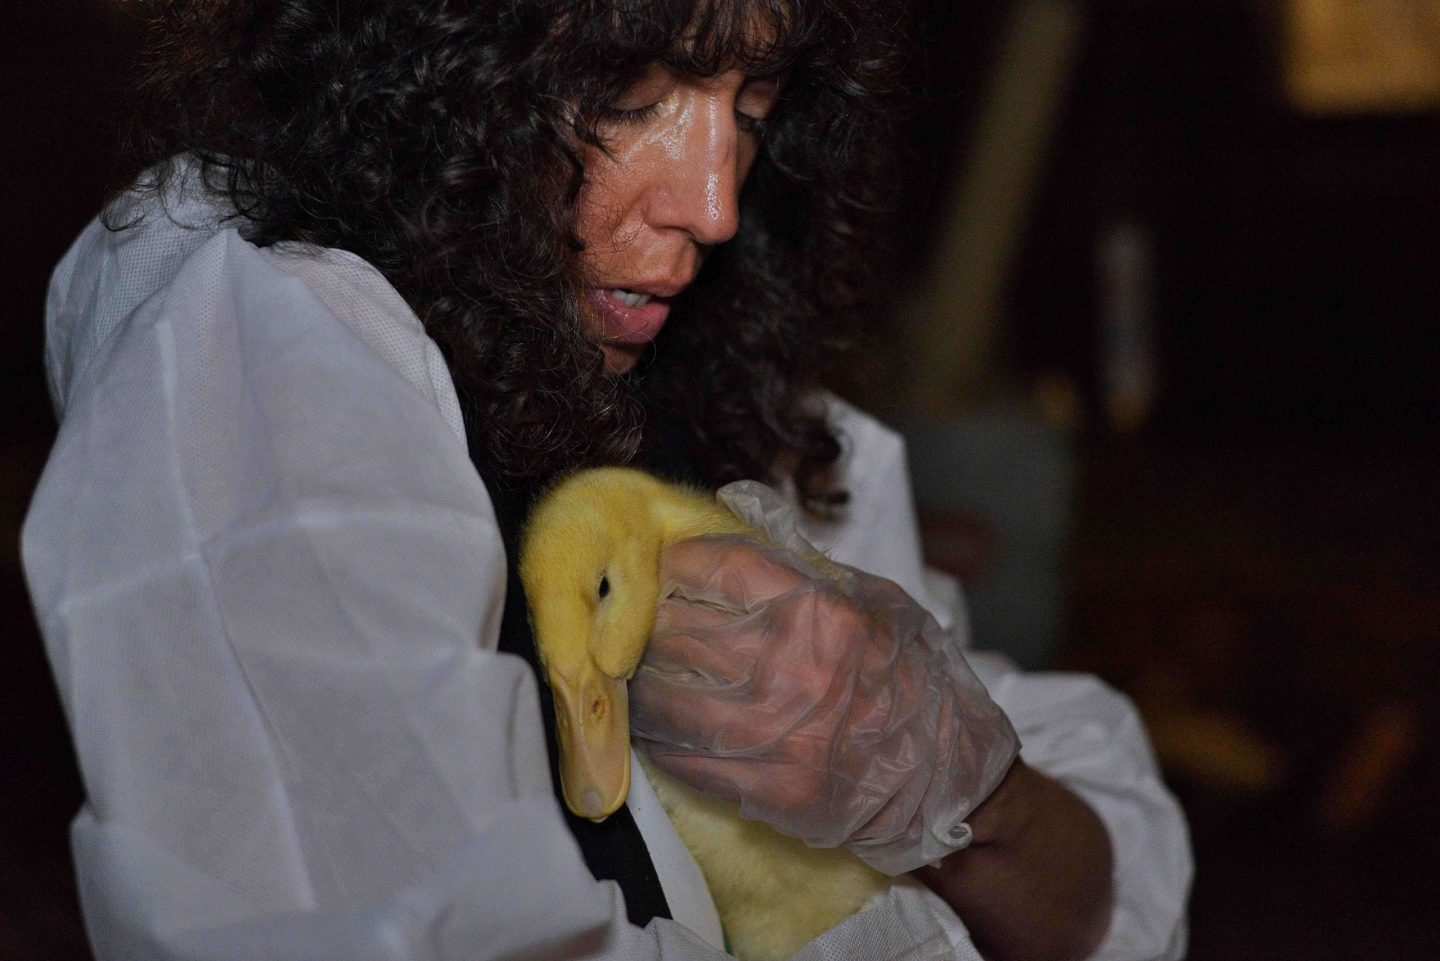 duck rescue activist